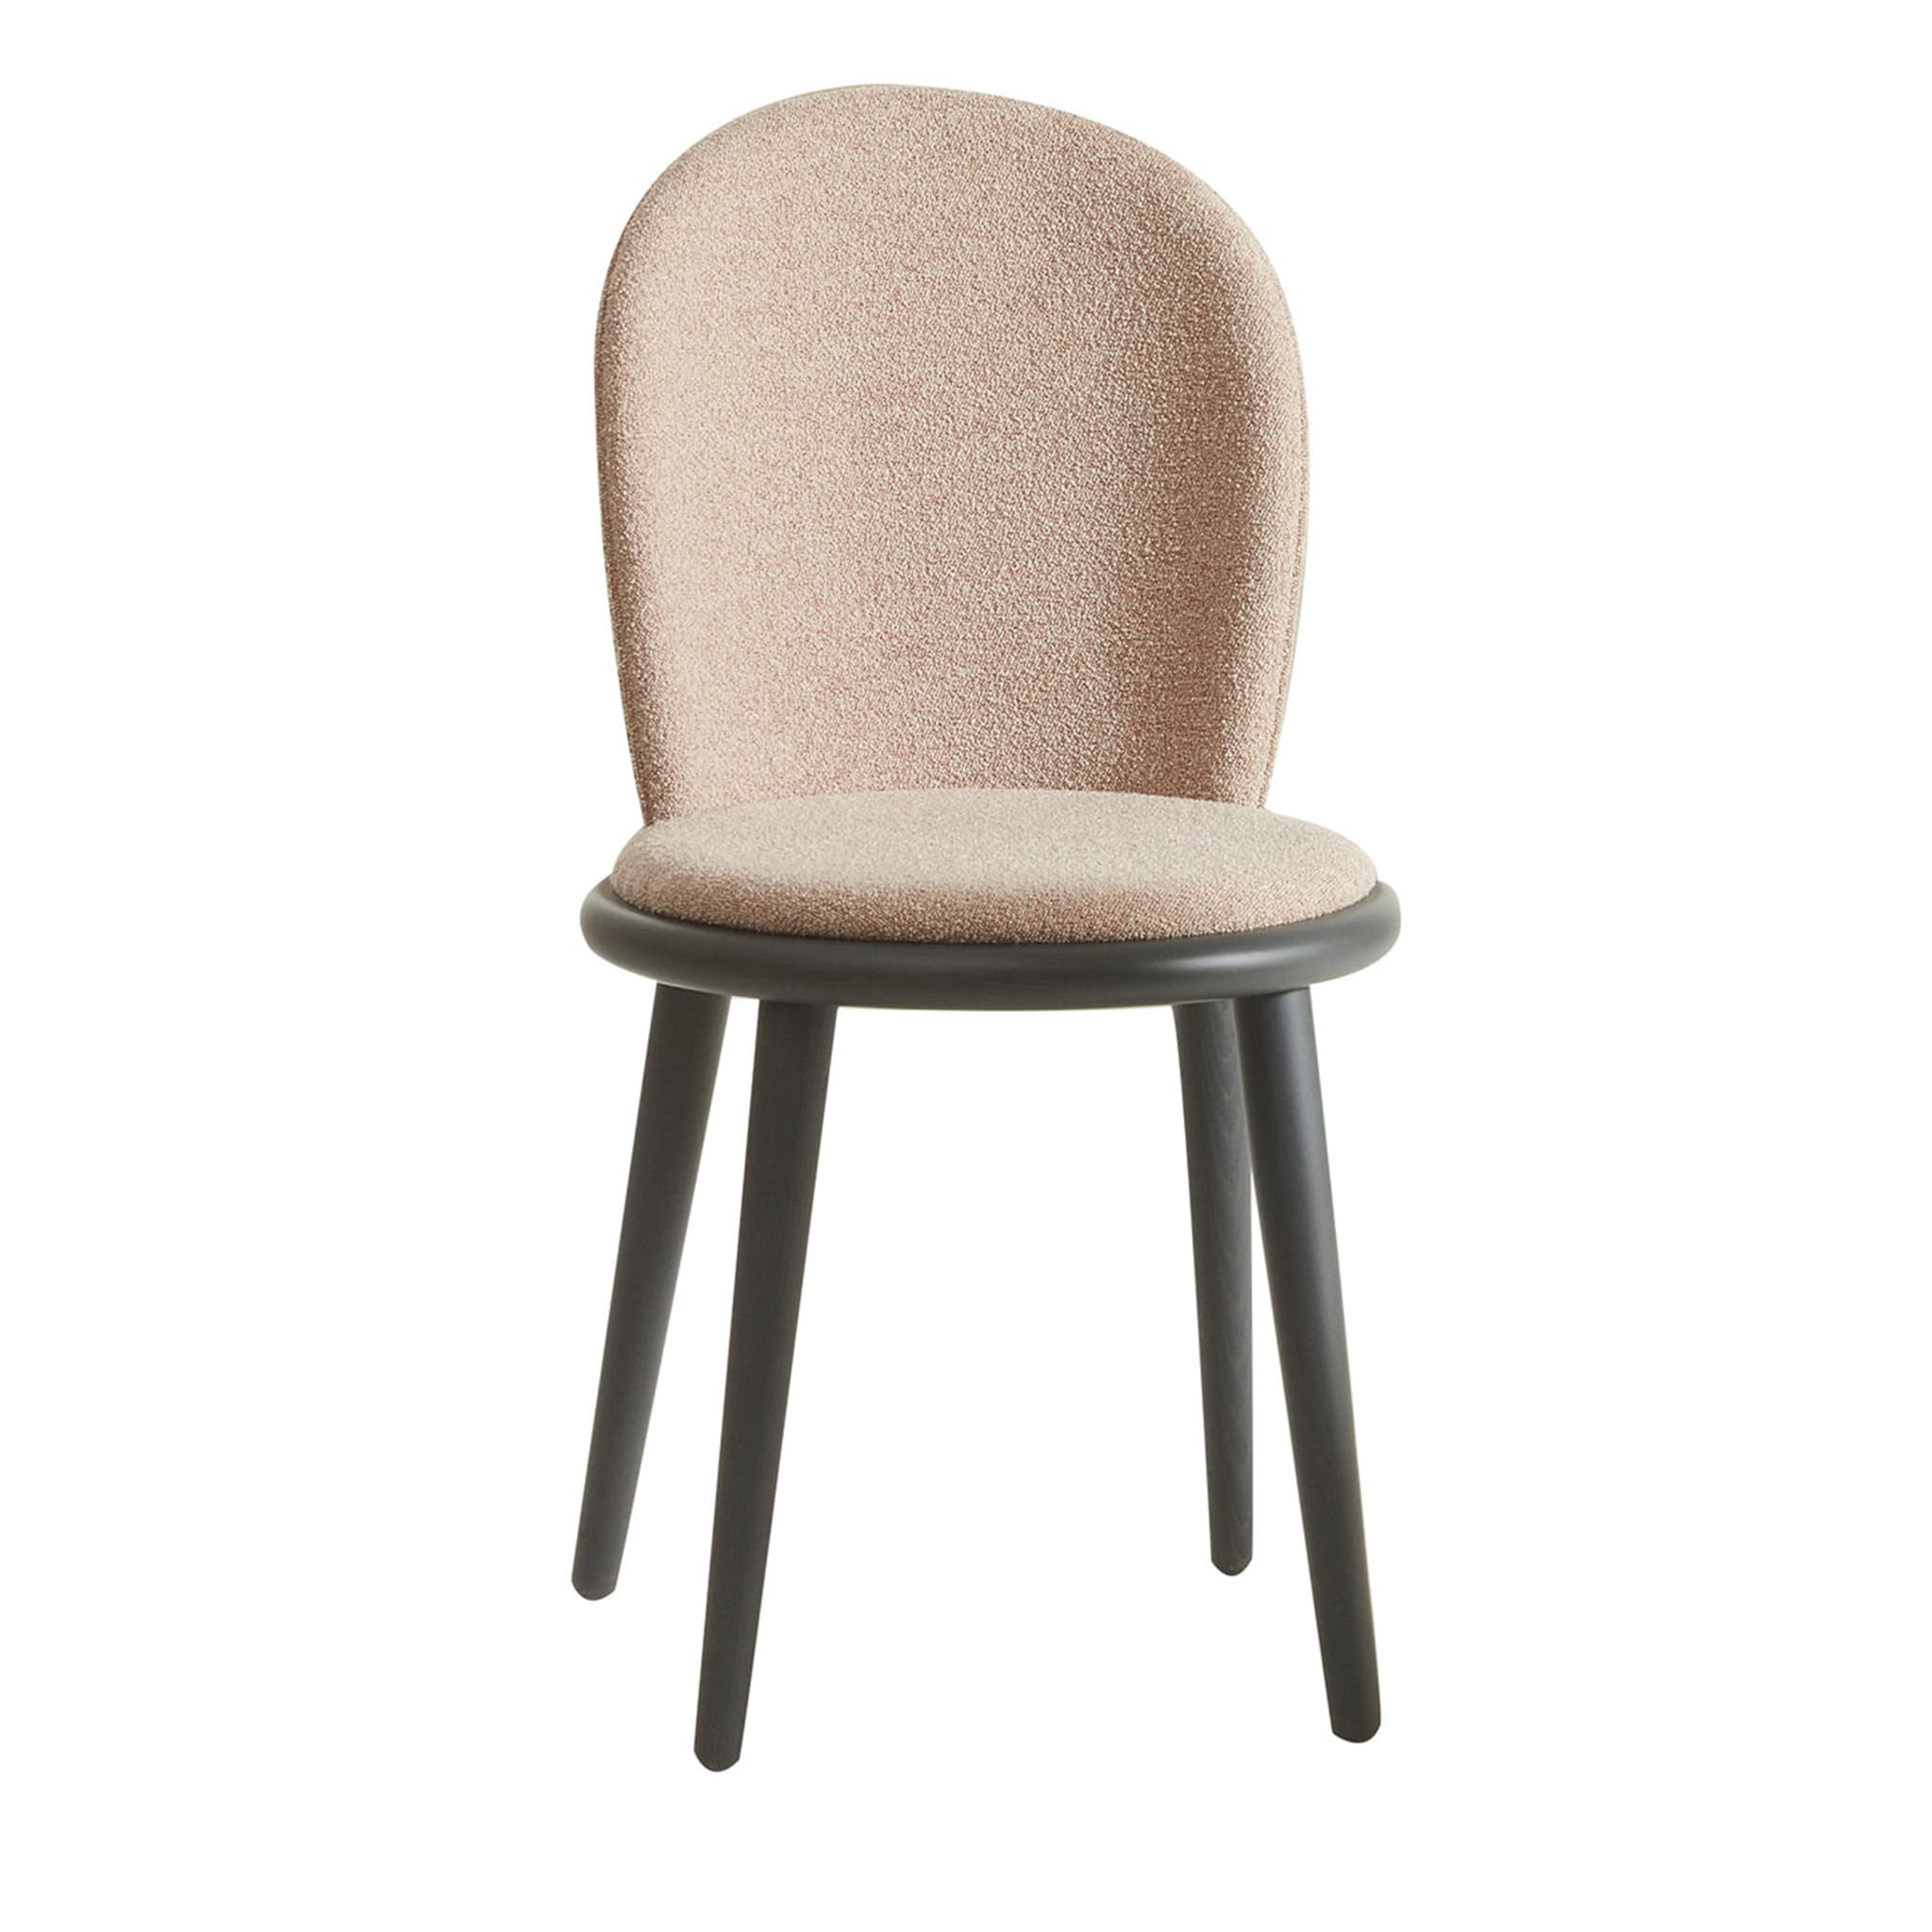 Veretta 921 Gray Chair by Cristina Celestino - Main view